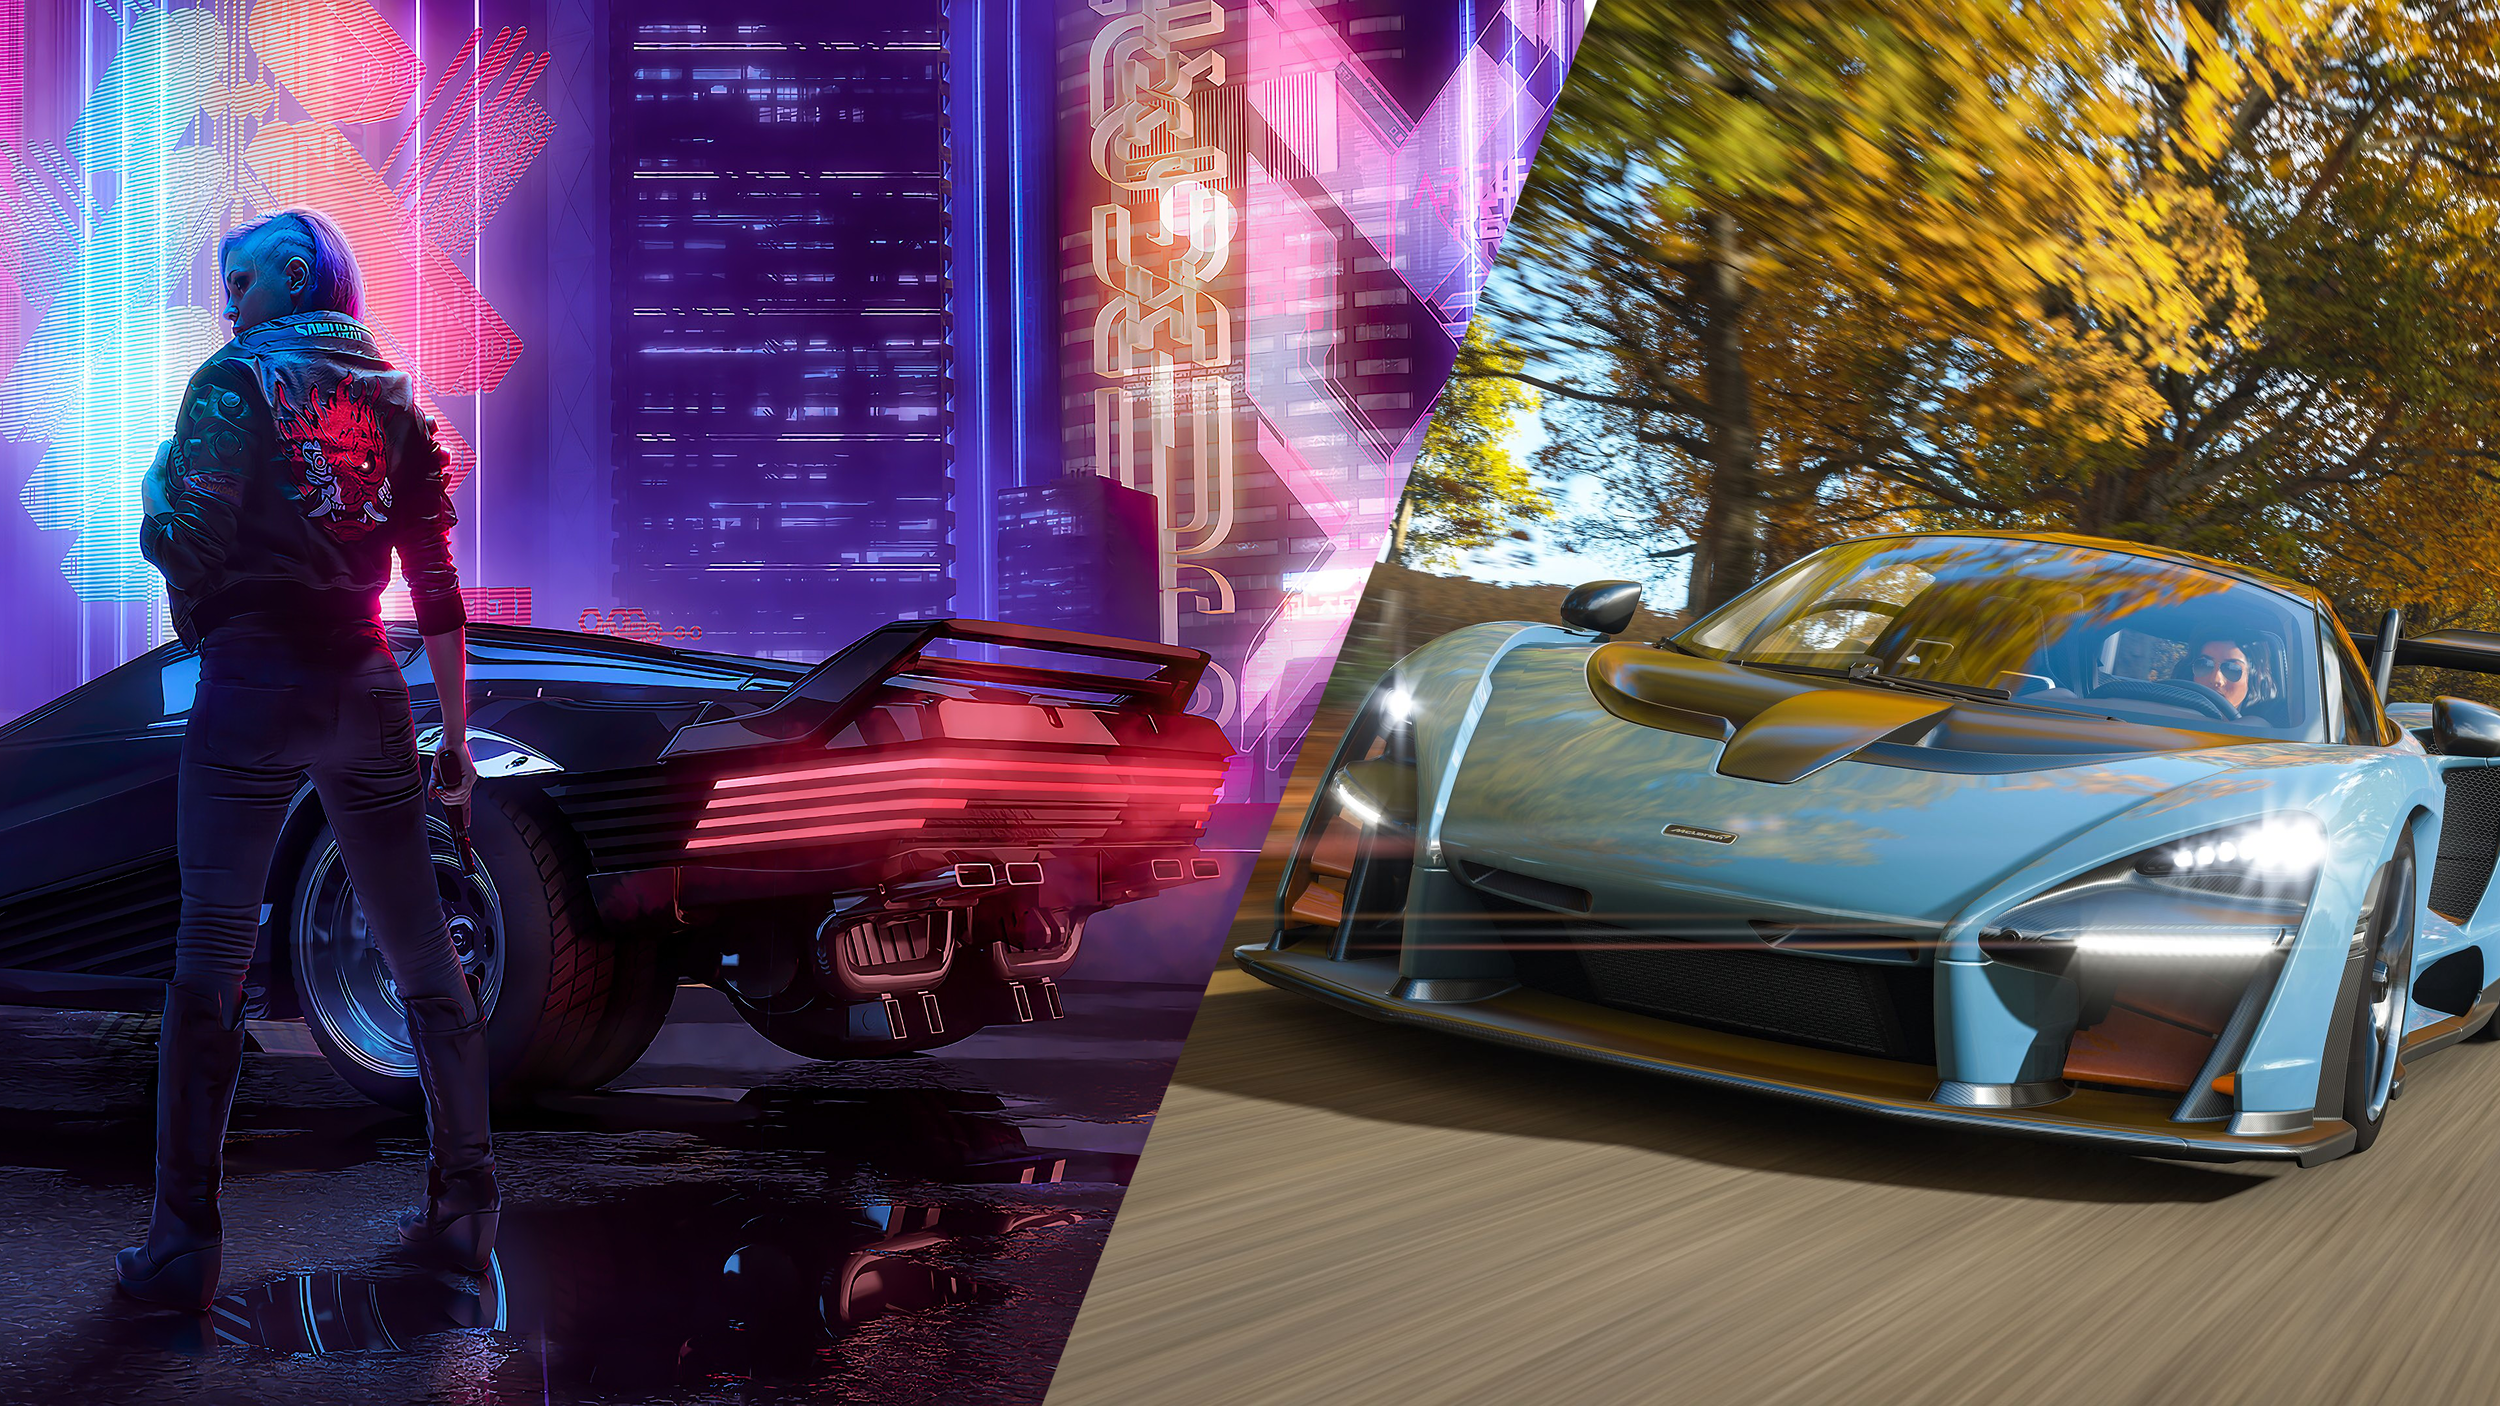 How to get Cyberpunk 2077 car in Forza Horizon 4 - Dexerto